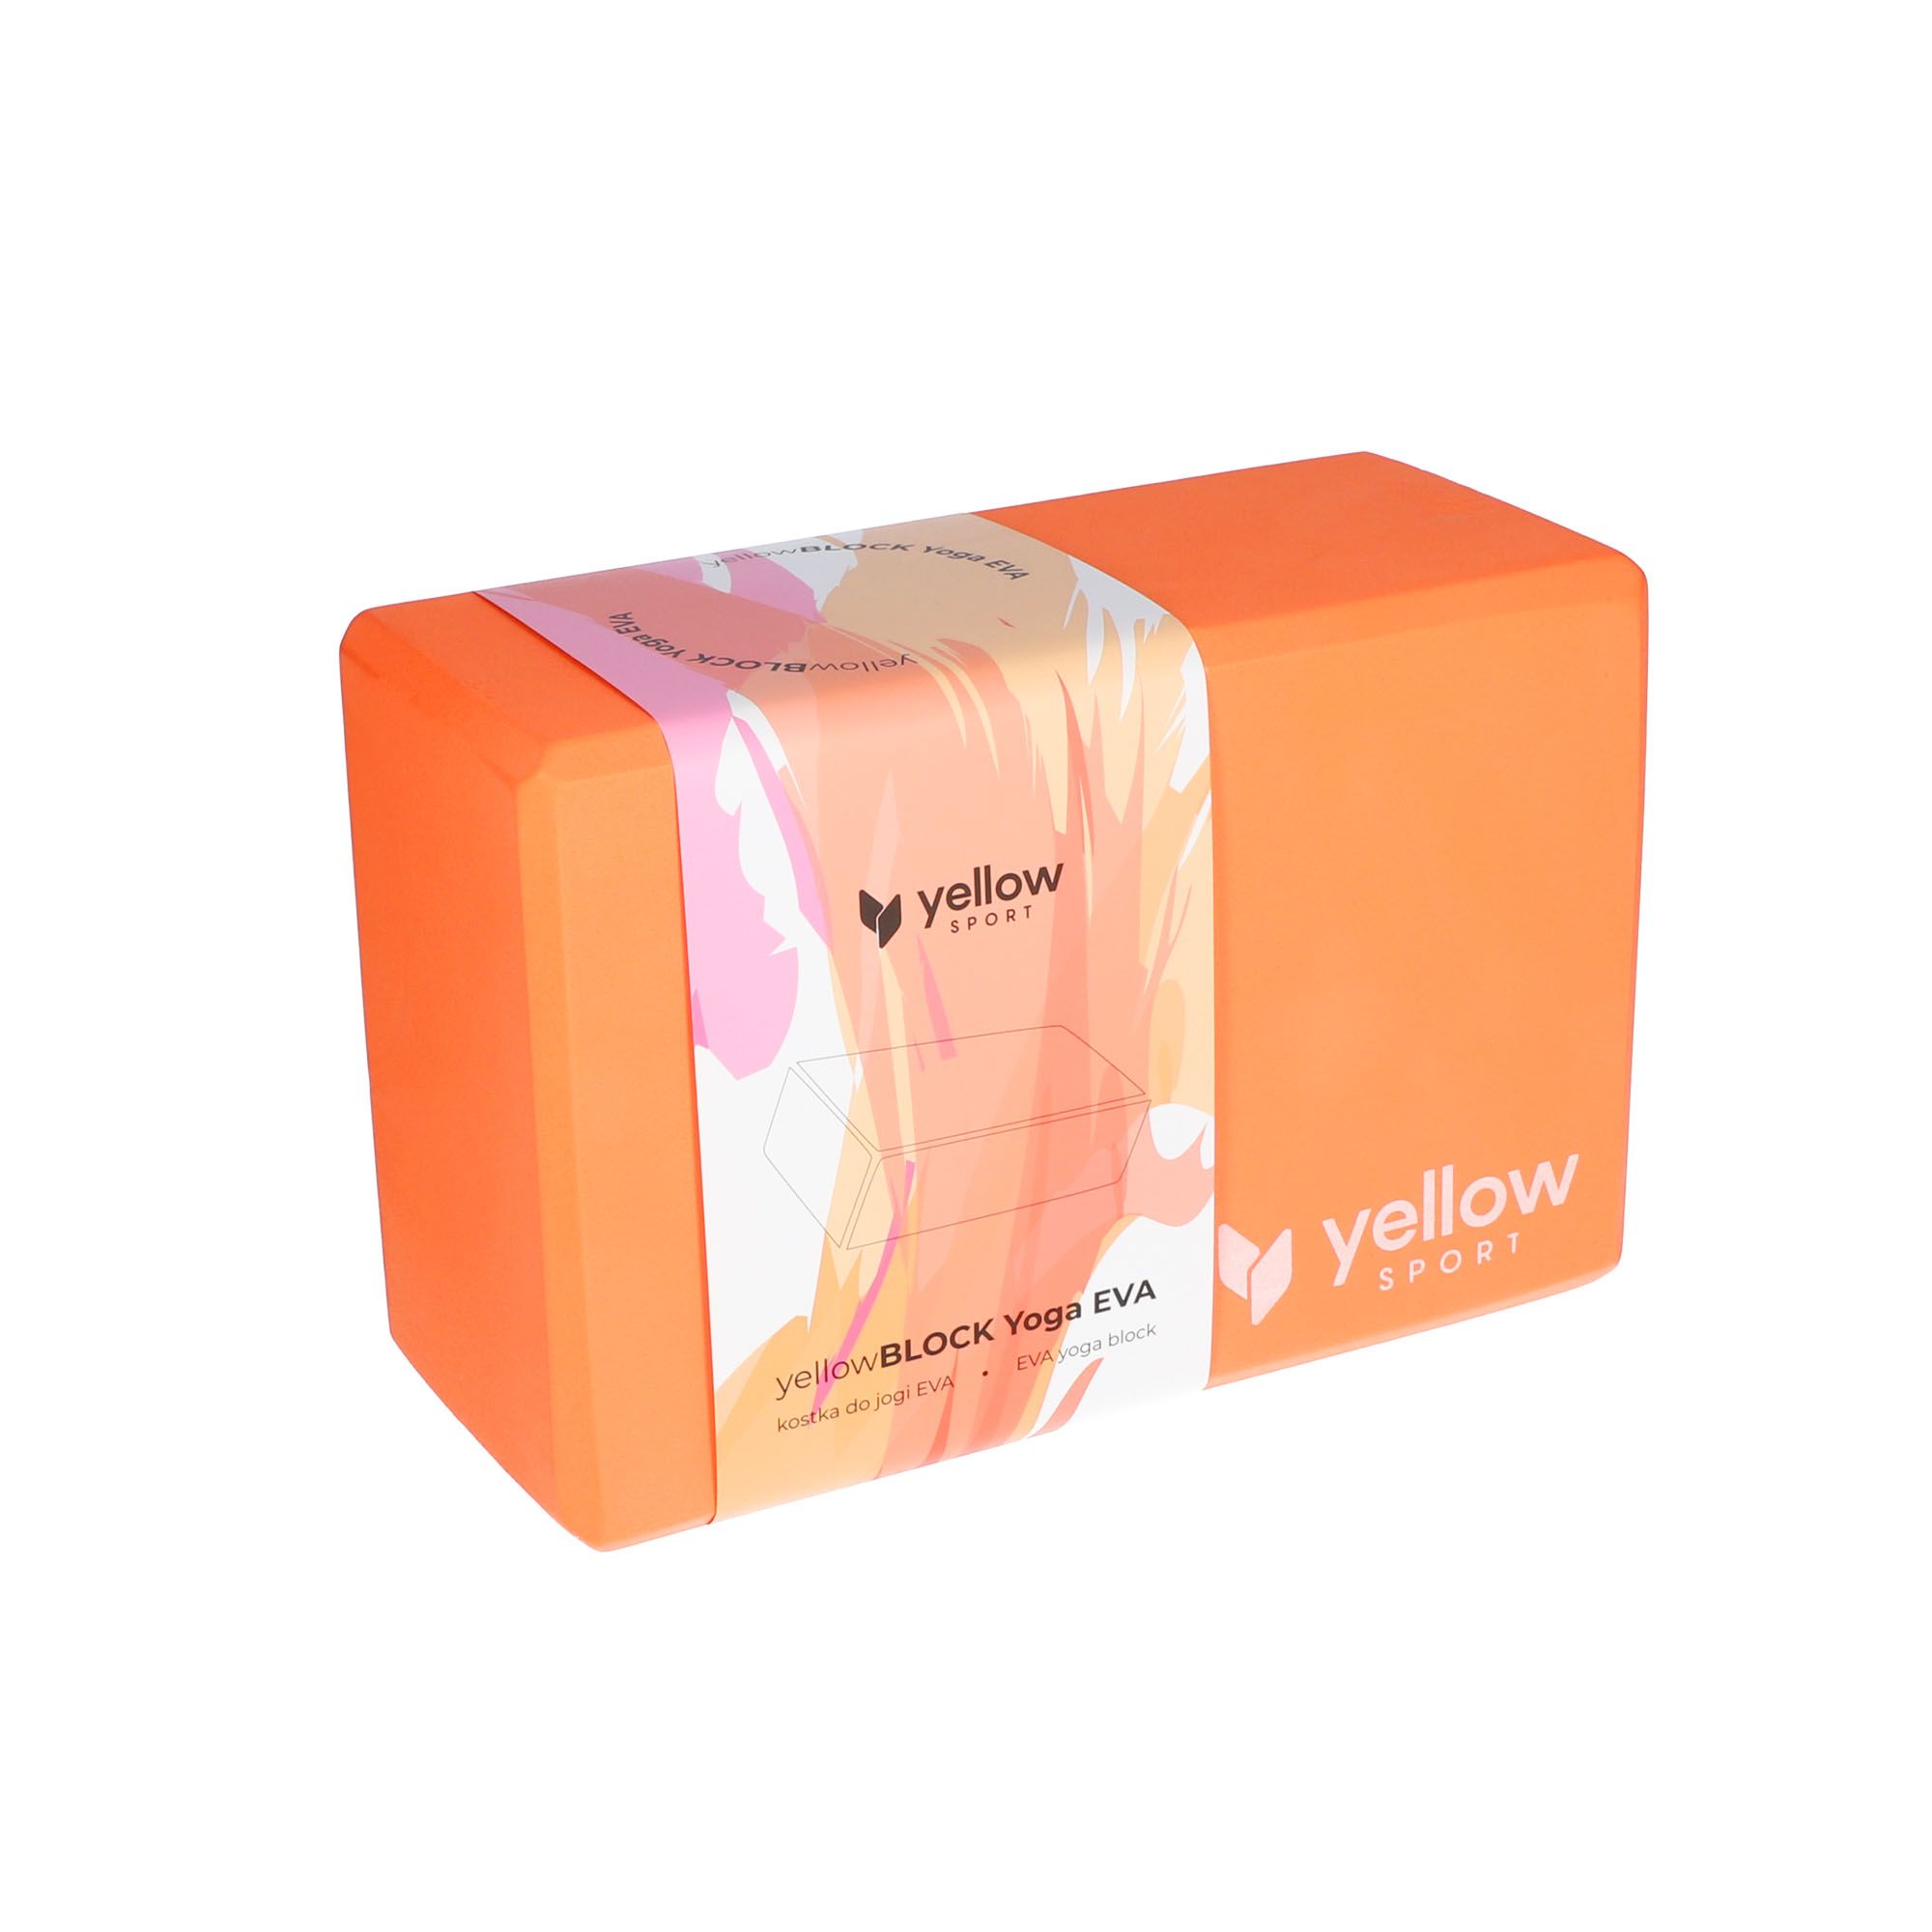 Yoga cube yellowBLOCK Yoga EVA - orange - Yellowsport